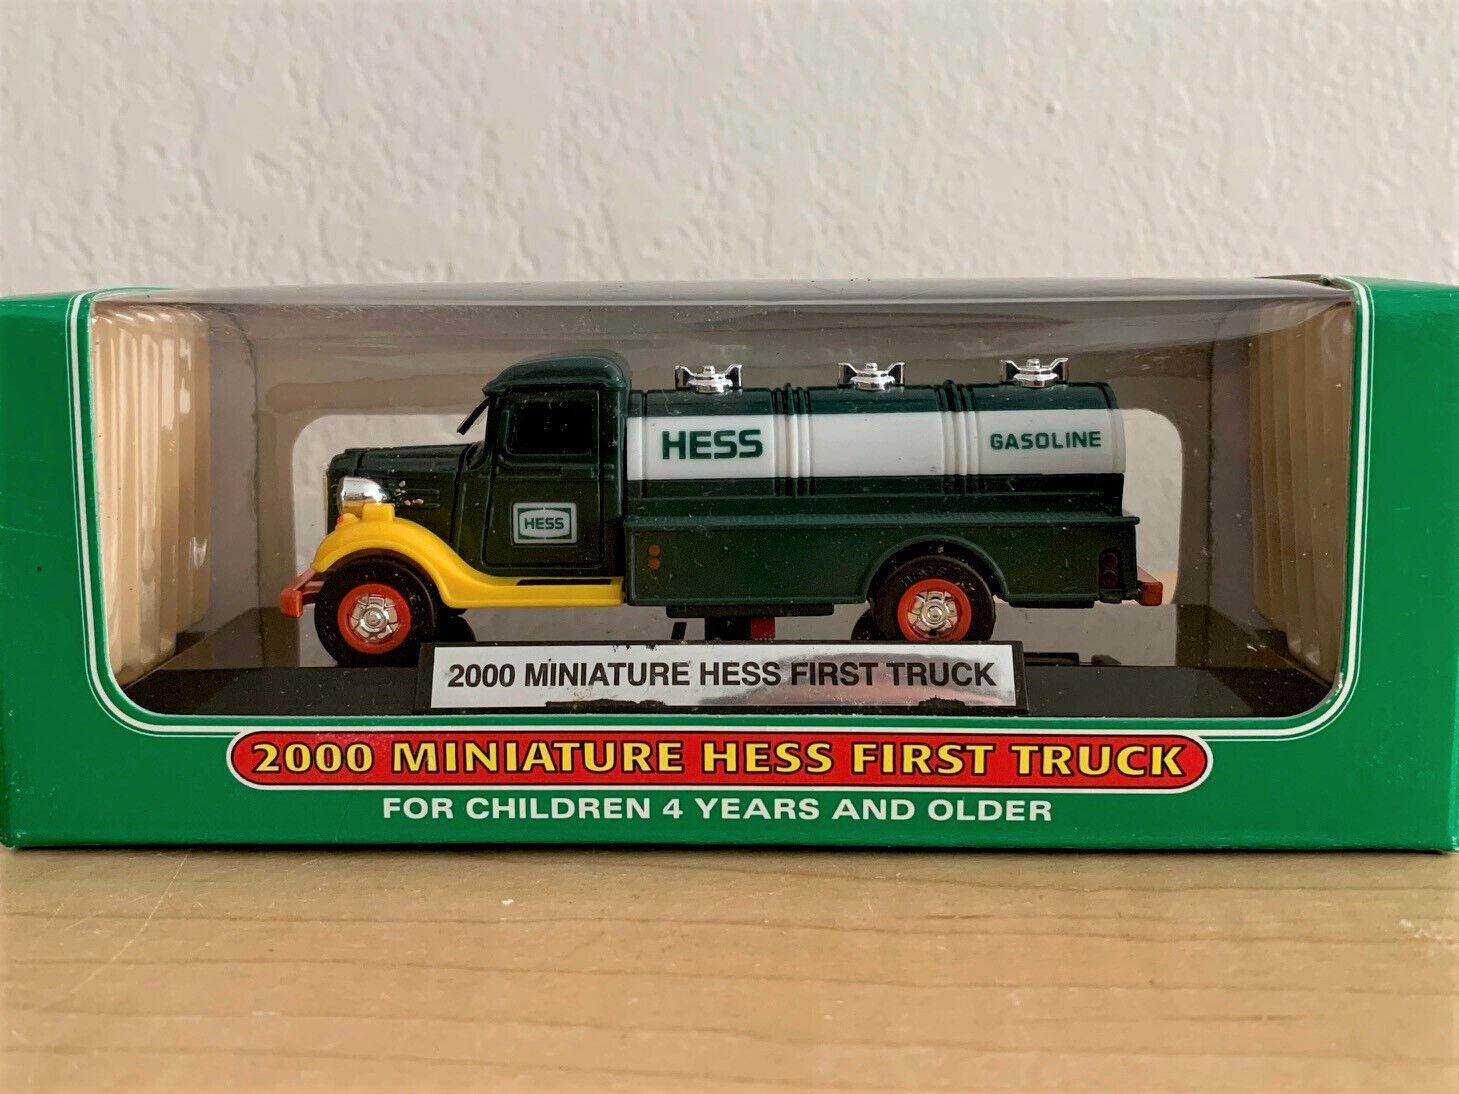 2000 Miniature Hess First Truck – 3rd Edition New in Original Box - $4.95